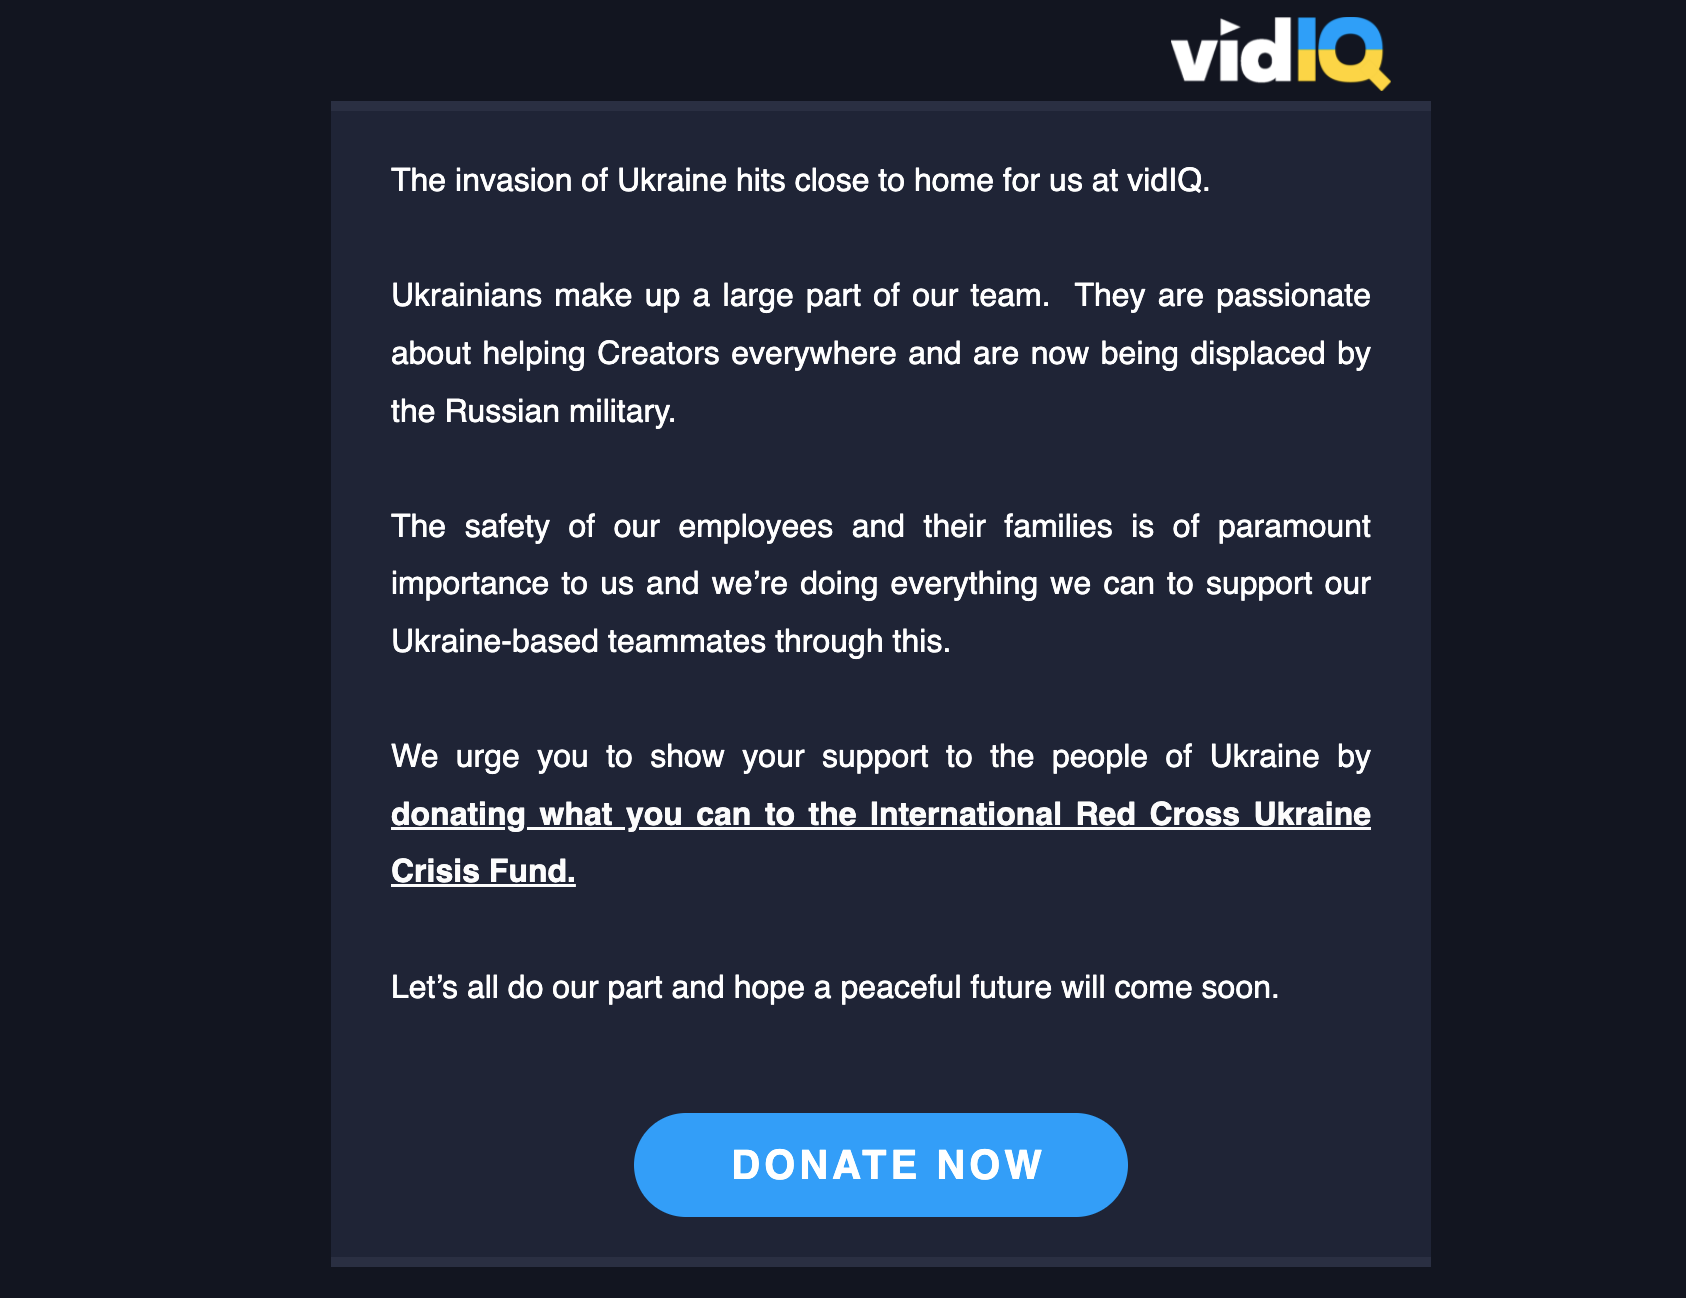 vidIQ donation page to support Ukraine